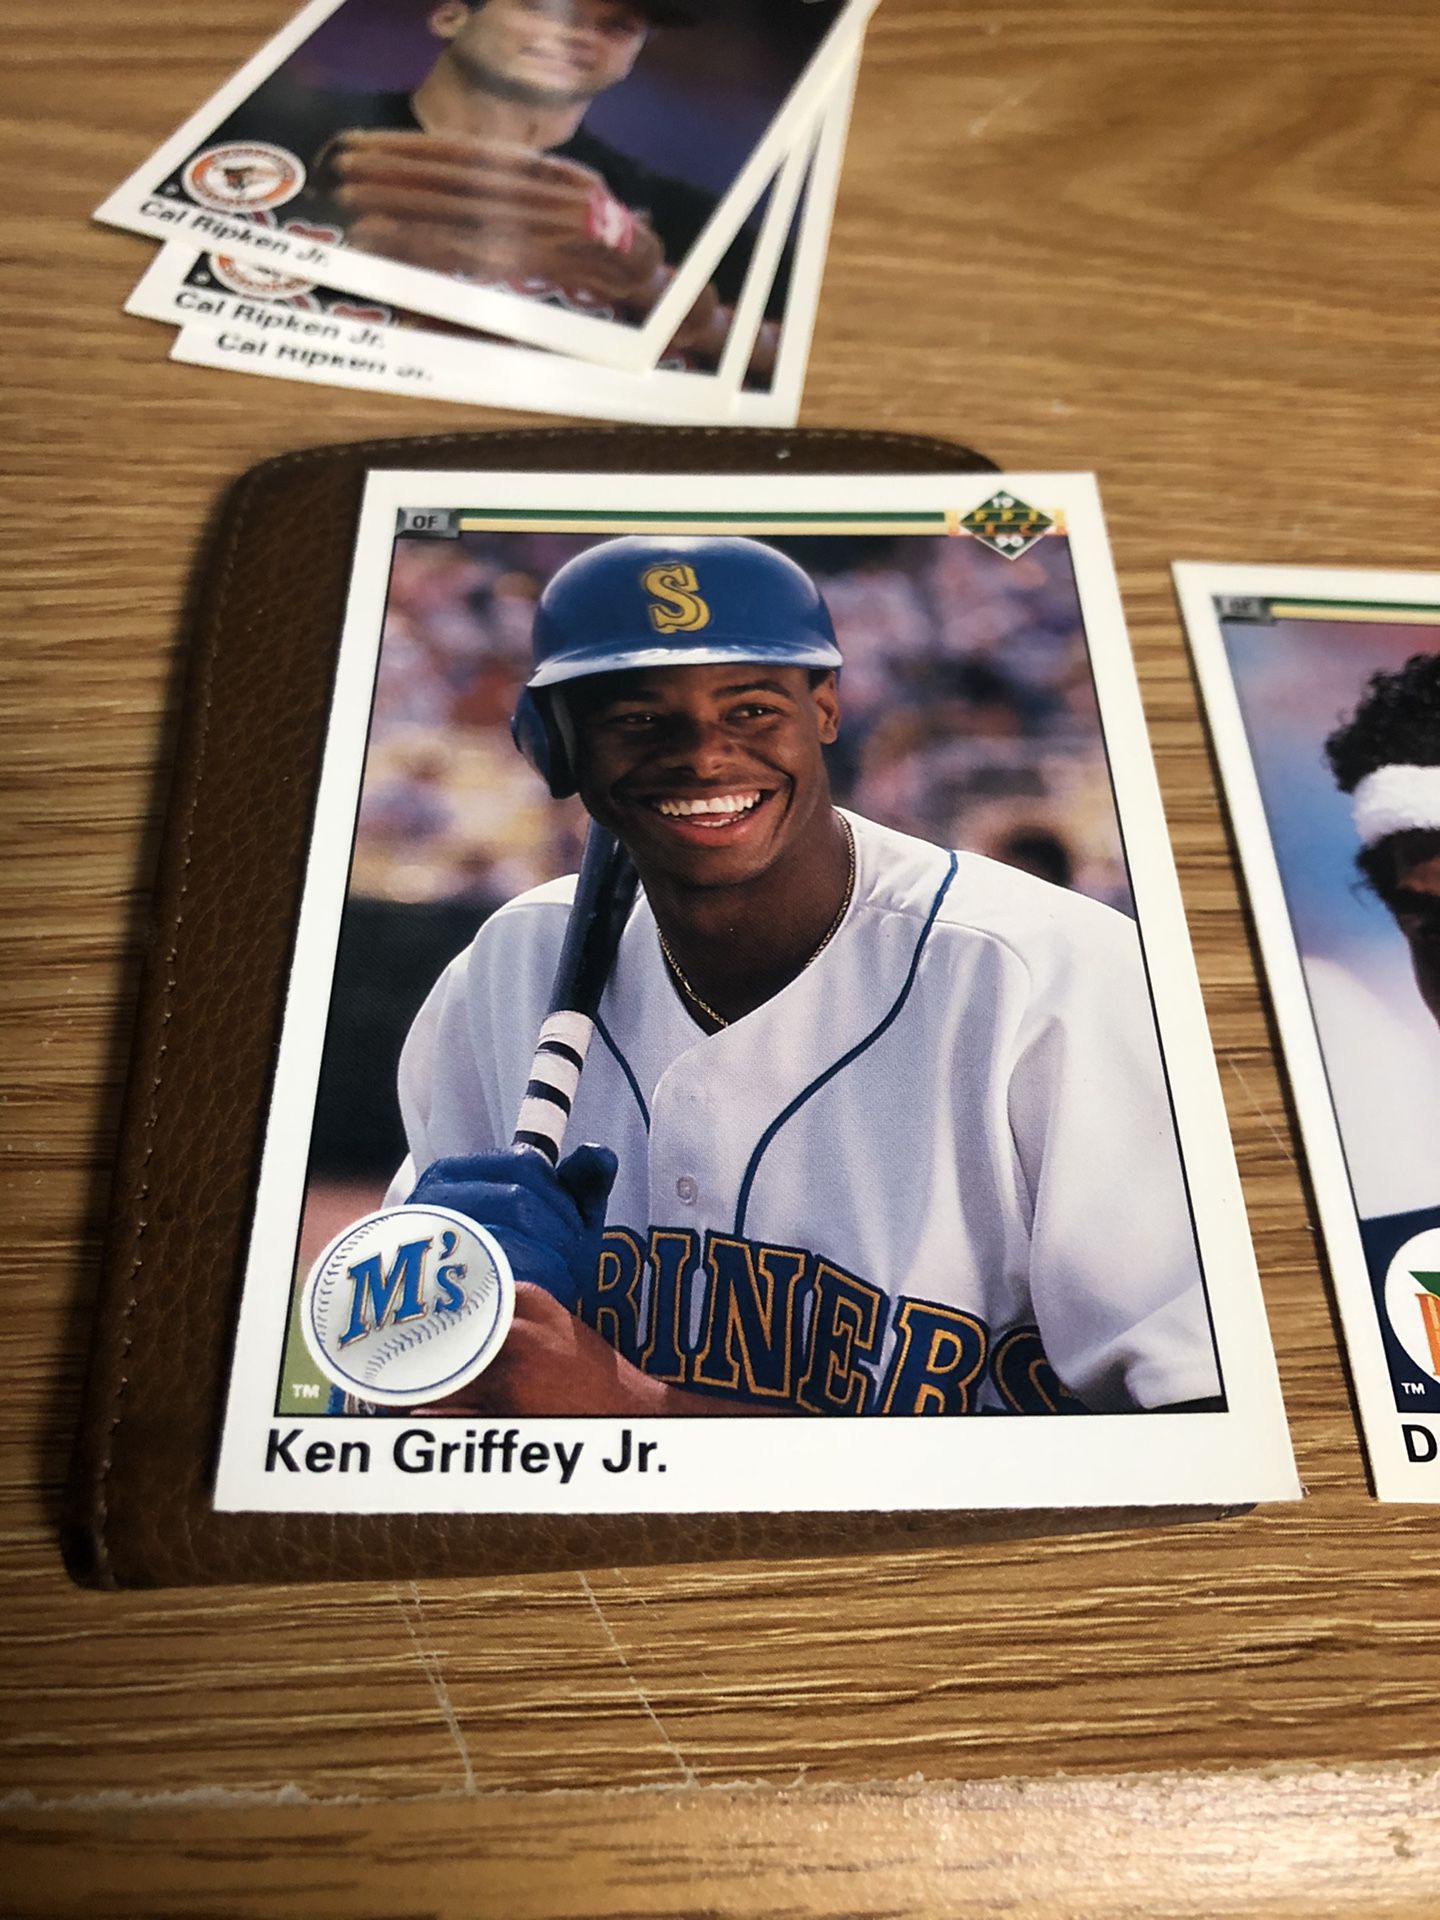 1990 Upper Deck baseball cards. Mint condition.